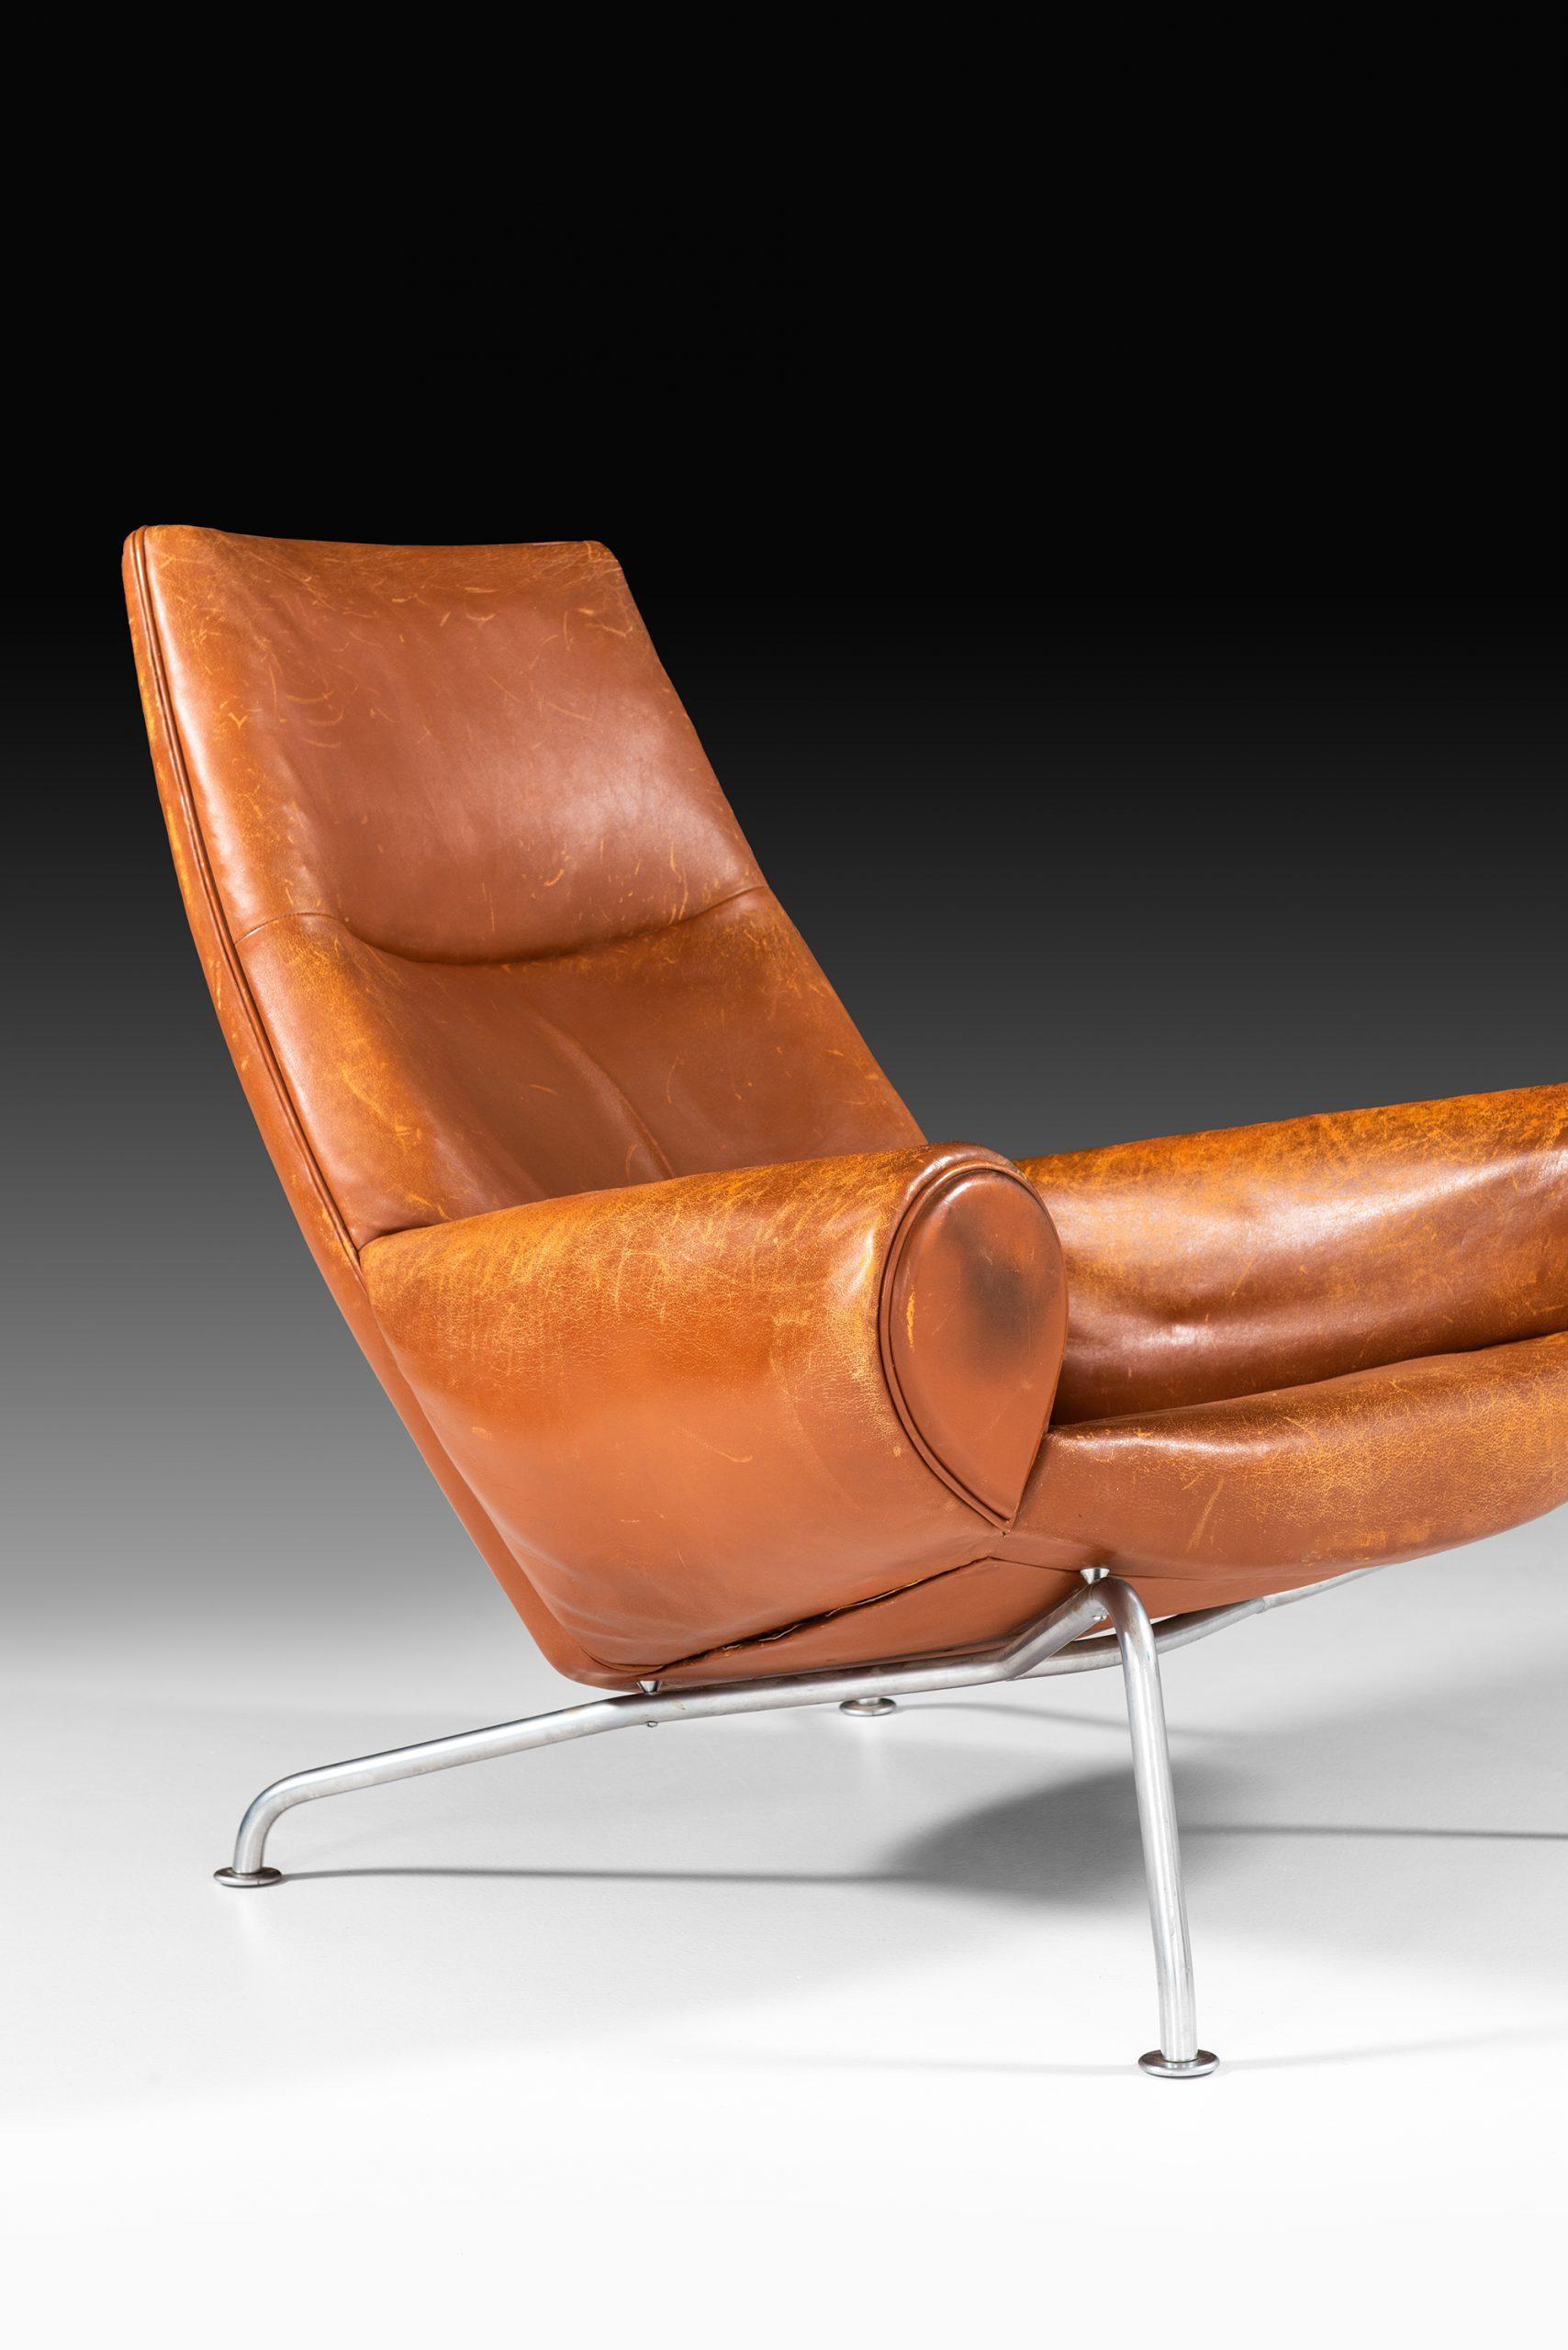 Mid-20th Century Hans Wegner Easy Chair Model AP47 / Queen OX Chair by A.P. Stolen in Denmark